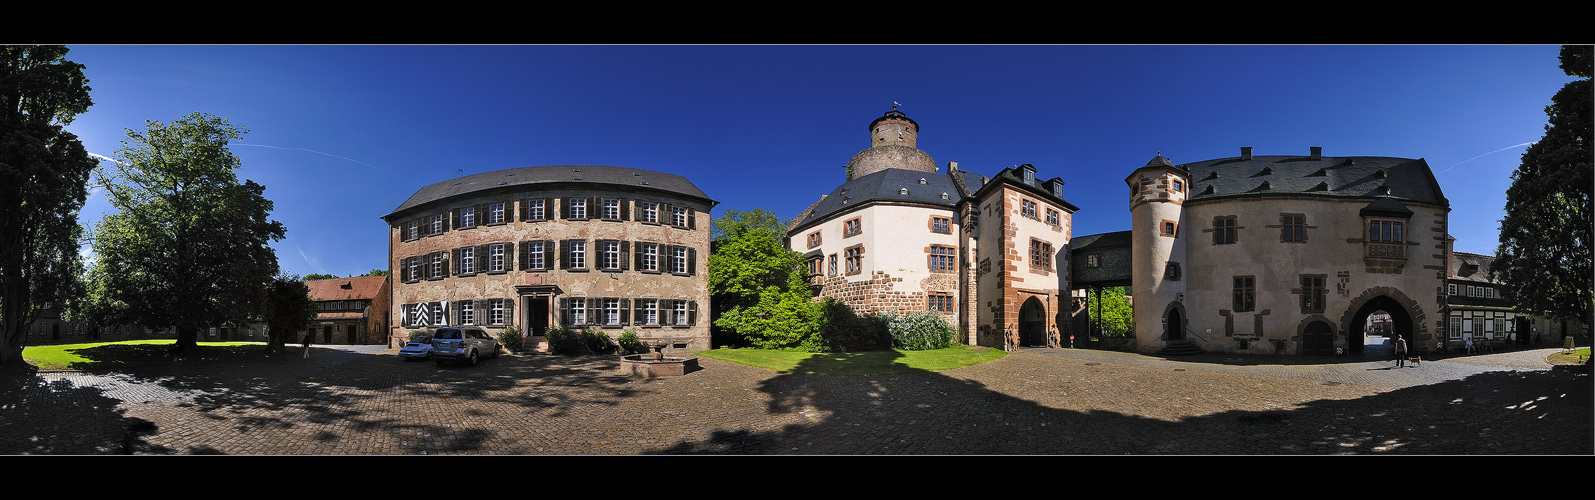 ... Büdinger Schloss - 360°-Pano ...